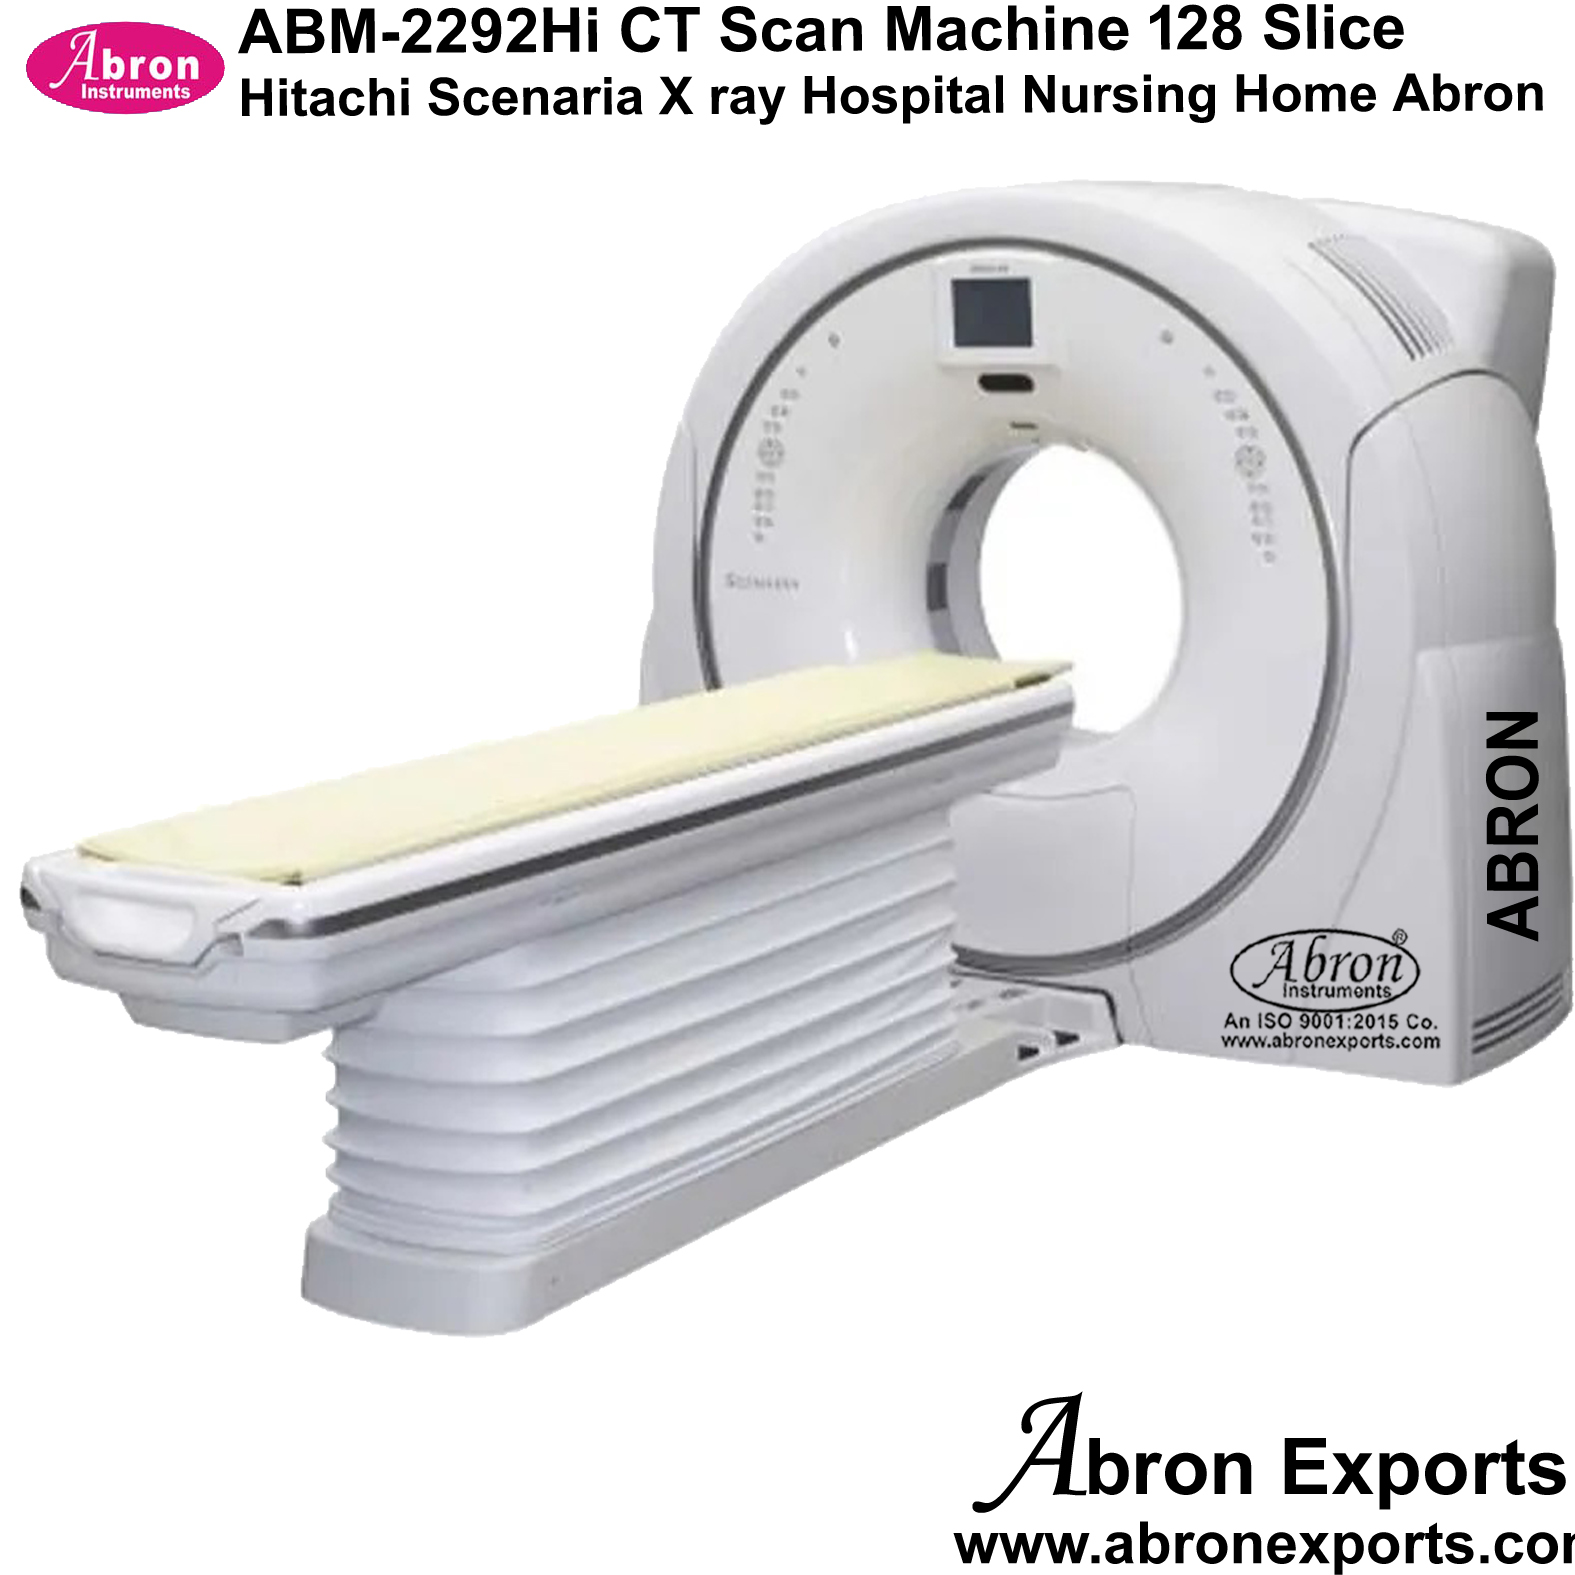  CT Scan Machine 128 Slice Hitachi scenaria X ray Hospital Nursing Home Abron ABM-2292Hi